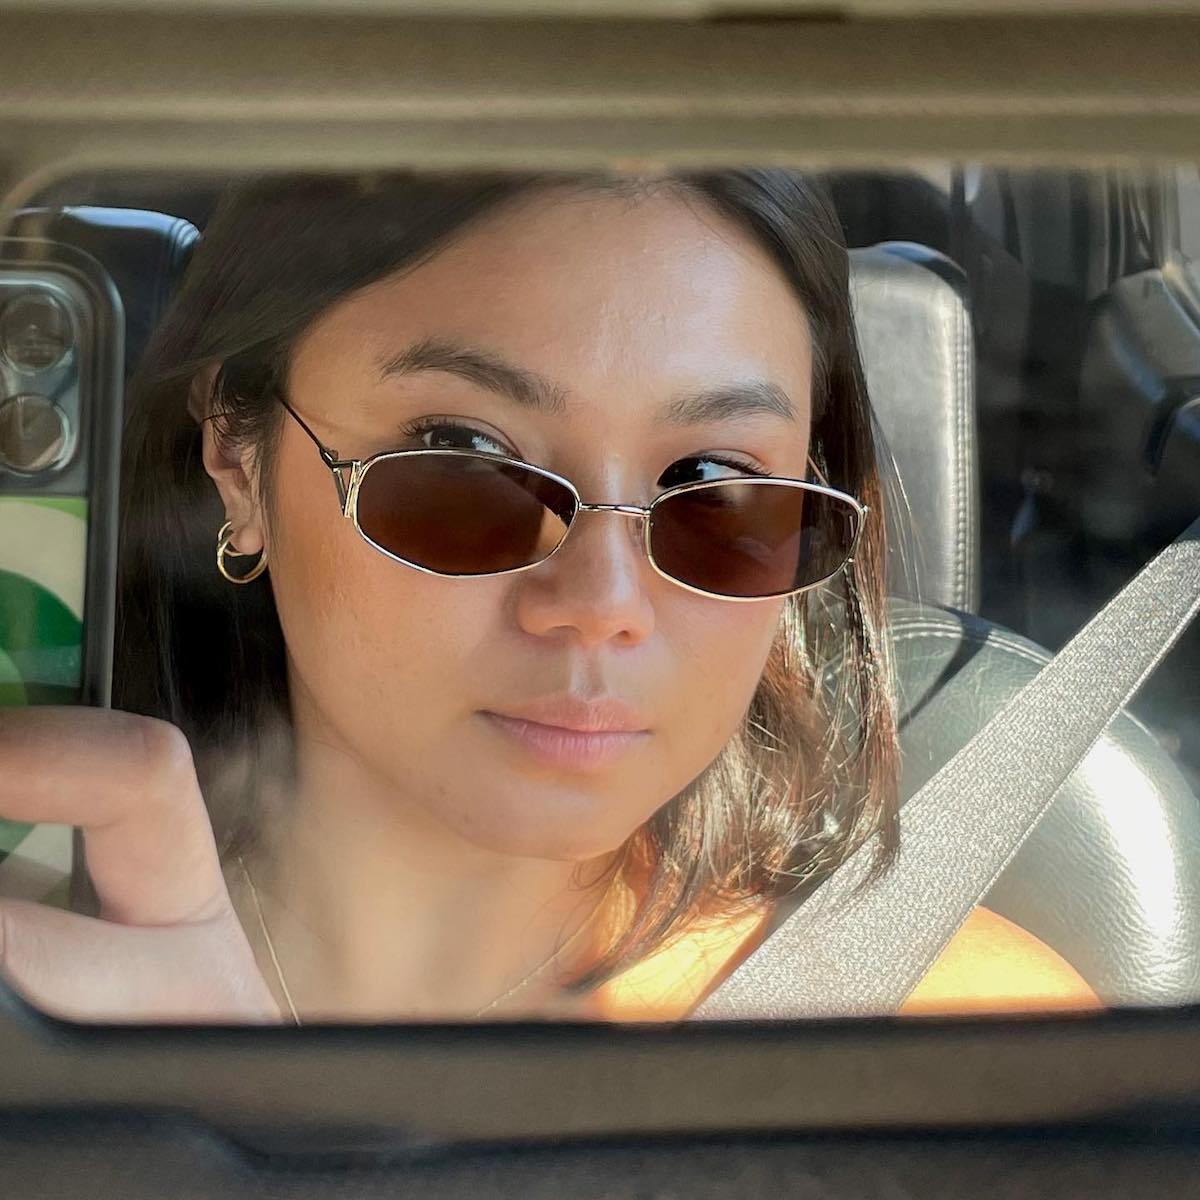 Mirror selfie with sunglasses